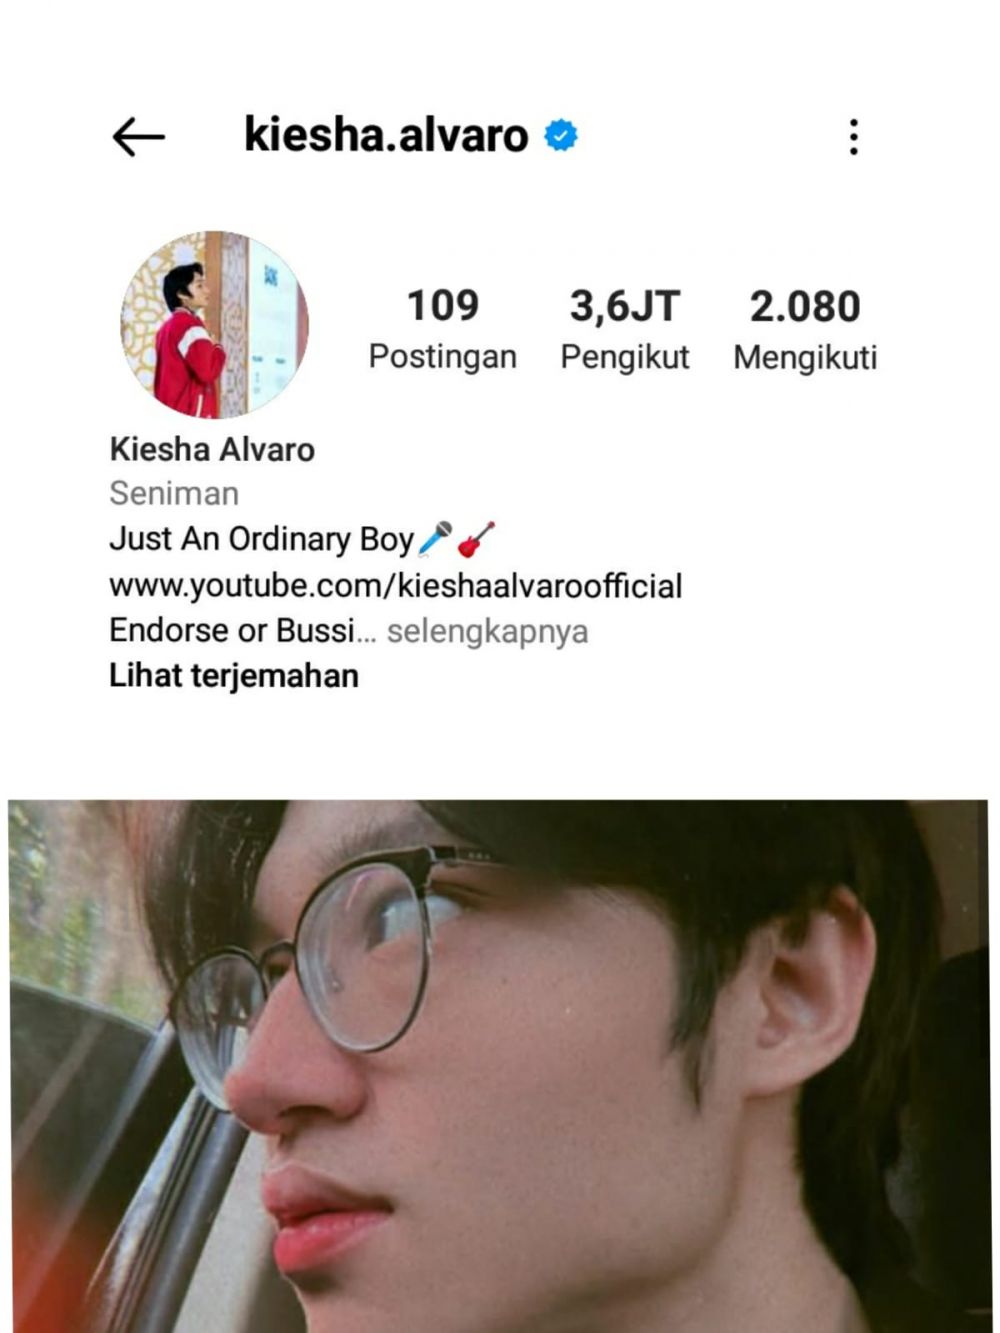 10 Artis Remaja Indonesia Punya Followers IG Terbanyak, Ada Idolamu?